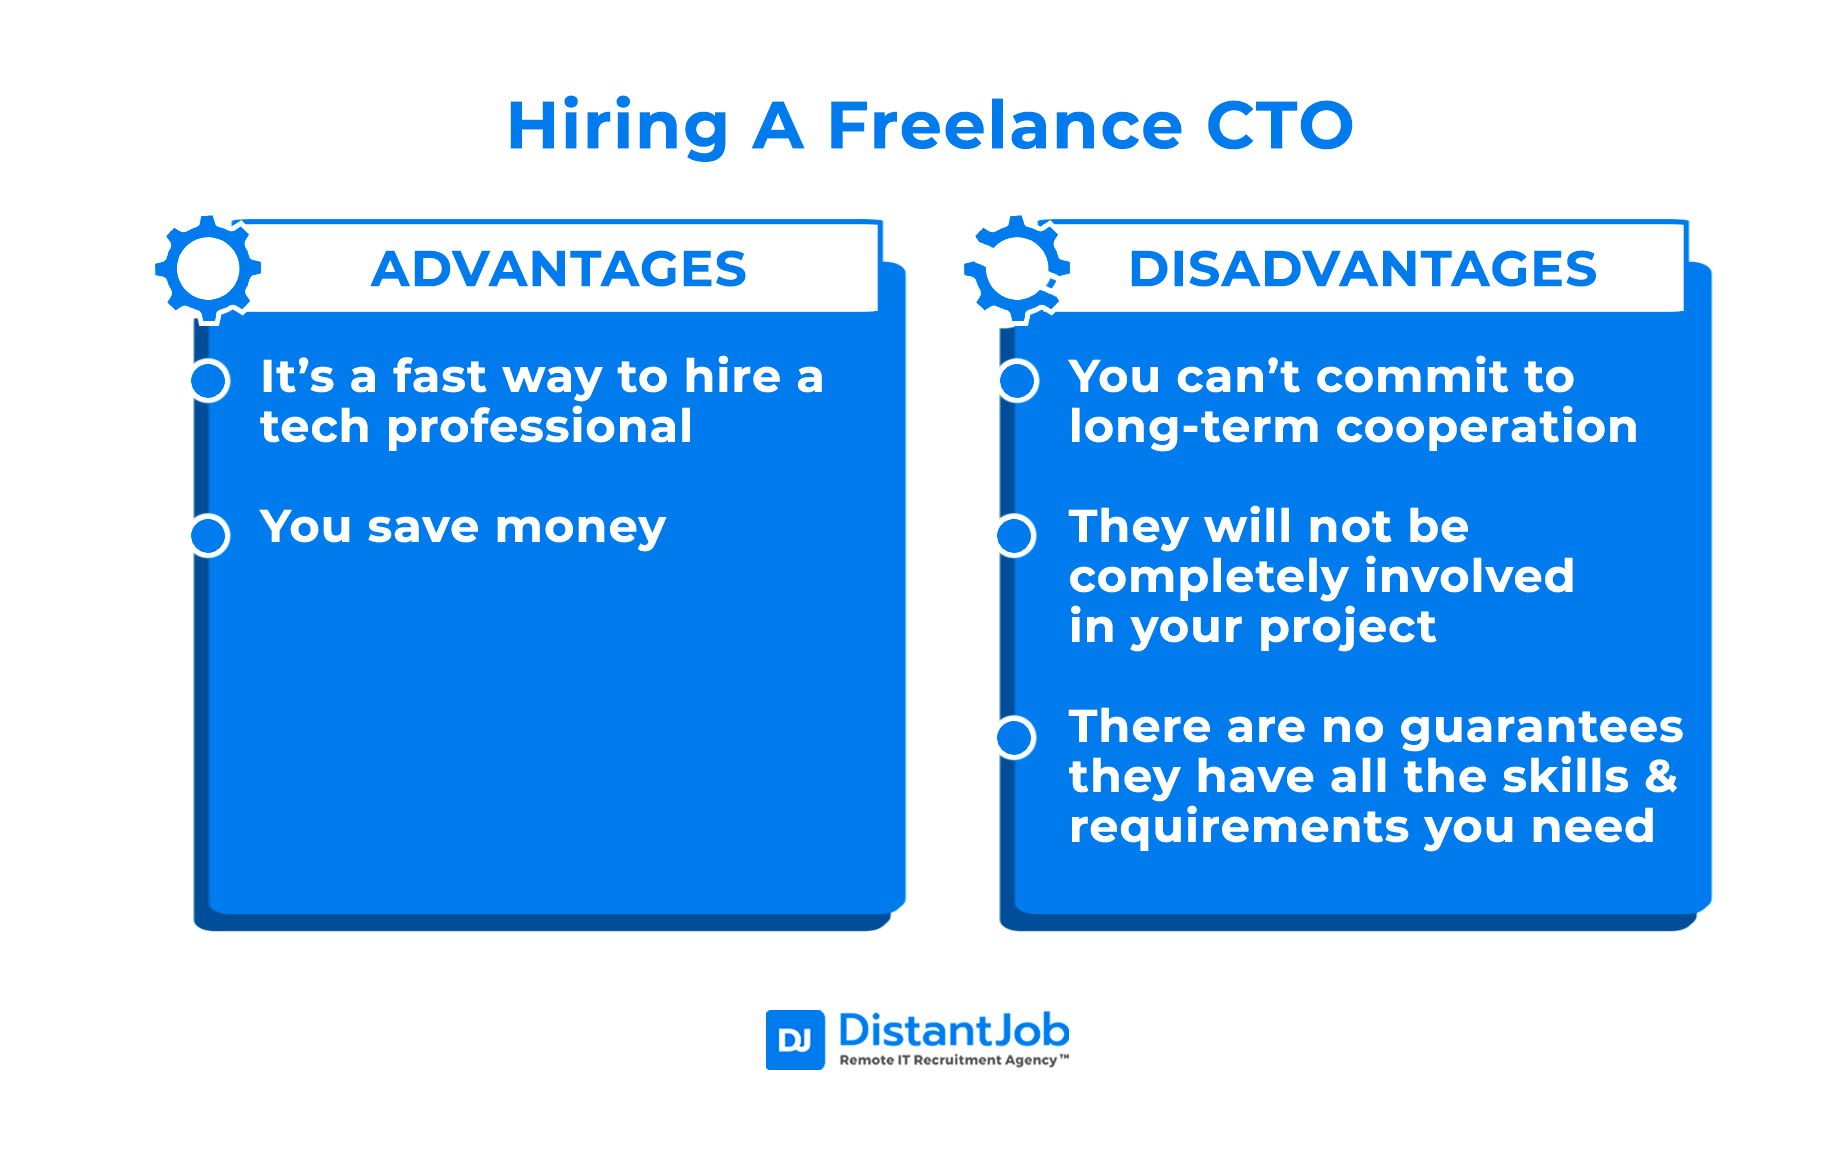 Advantages of hiring a freelance CTO